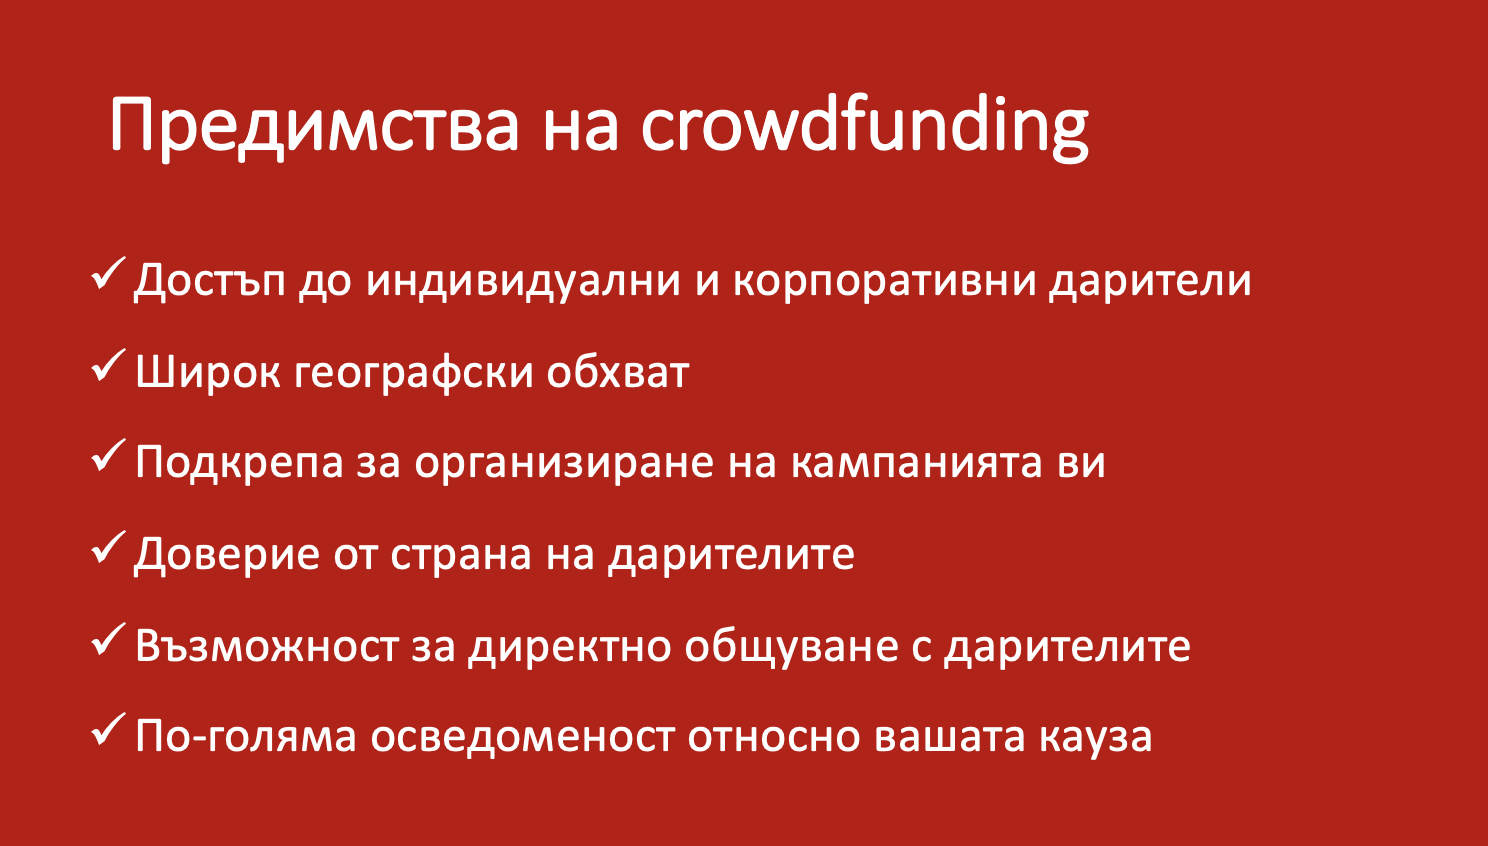 Предимства на crowdfunding